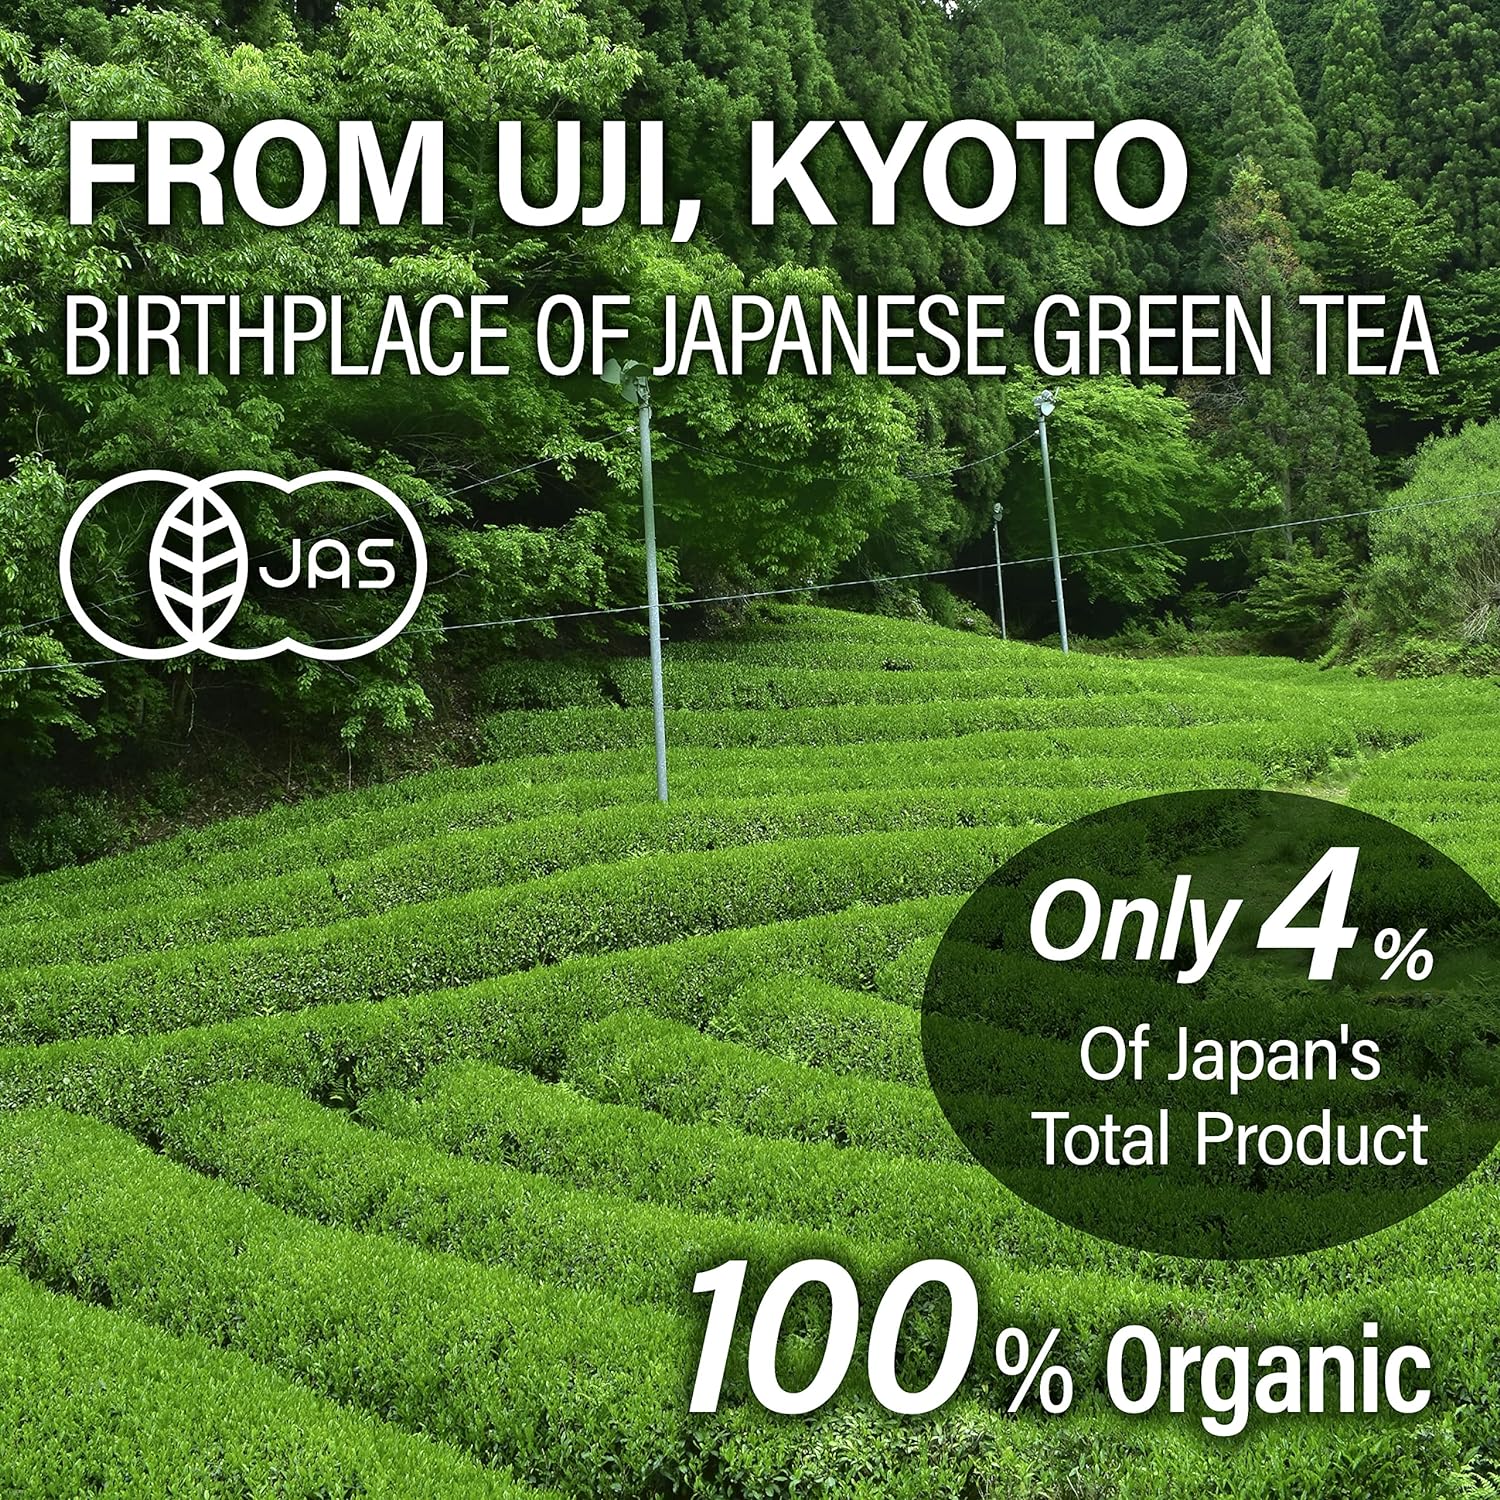 Organic Karigane Twig Loose Leaf Green Tea with Matcha